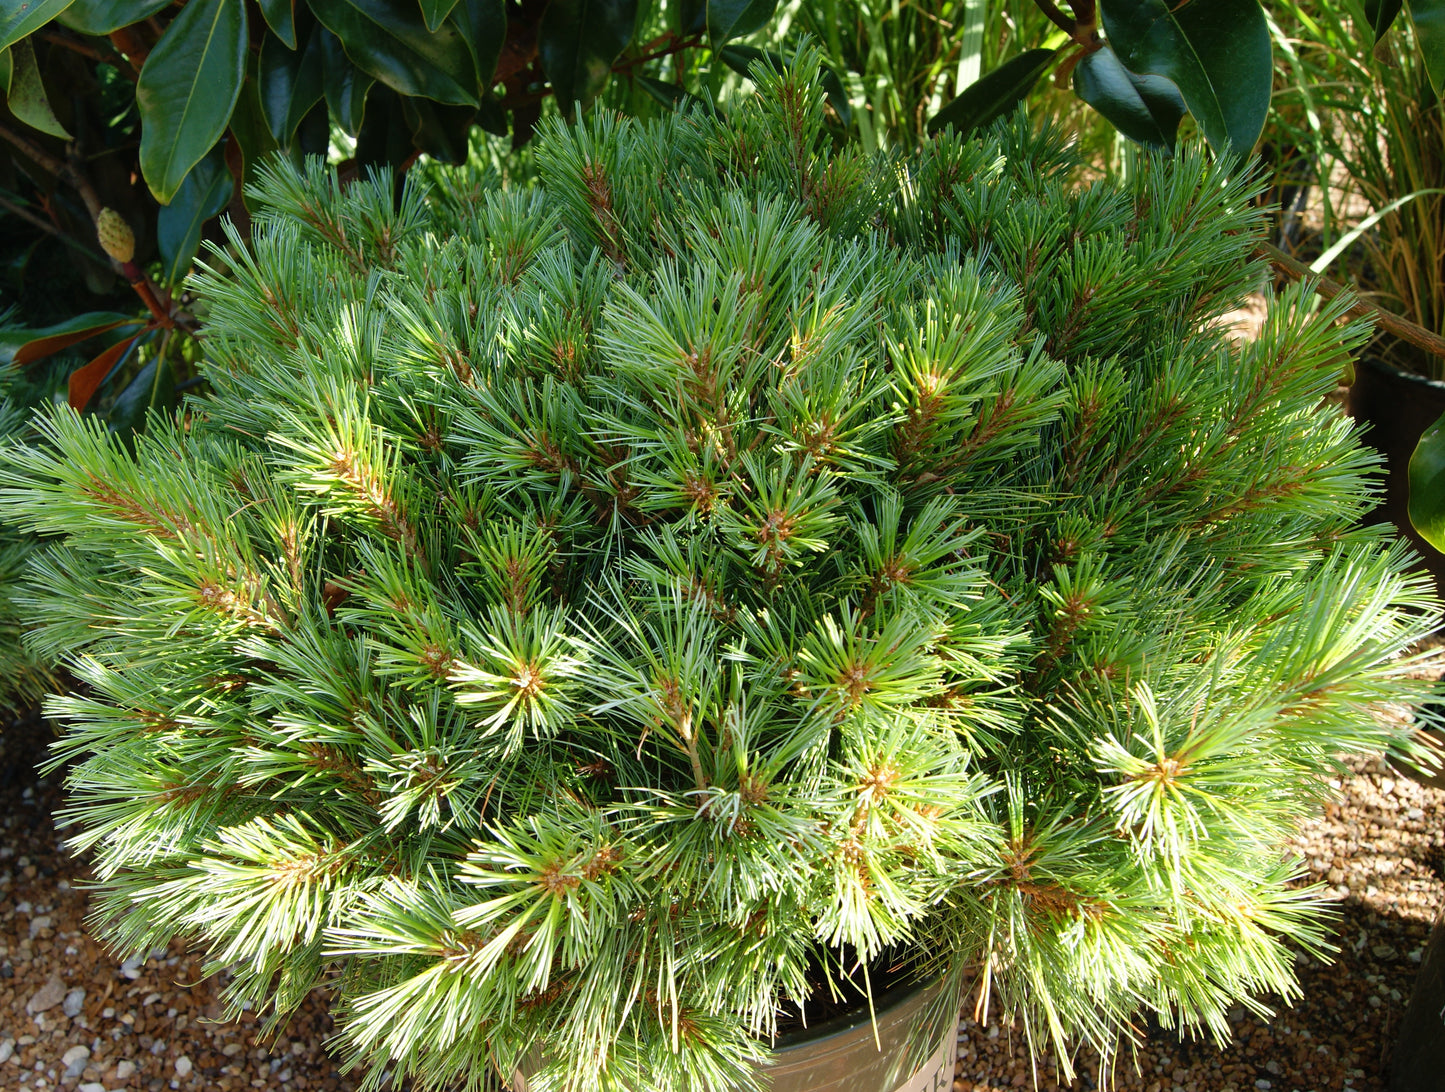 Pinus strobus 'Blue Shag'